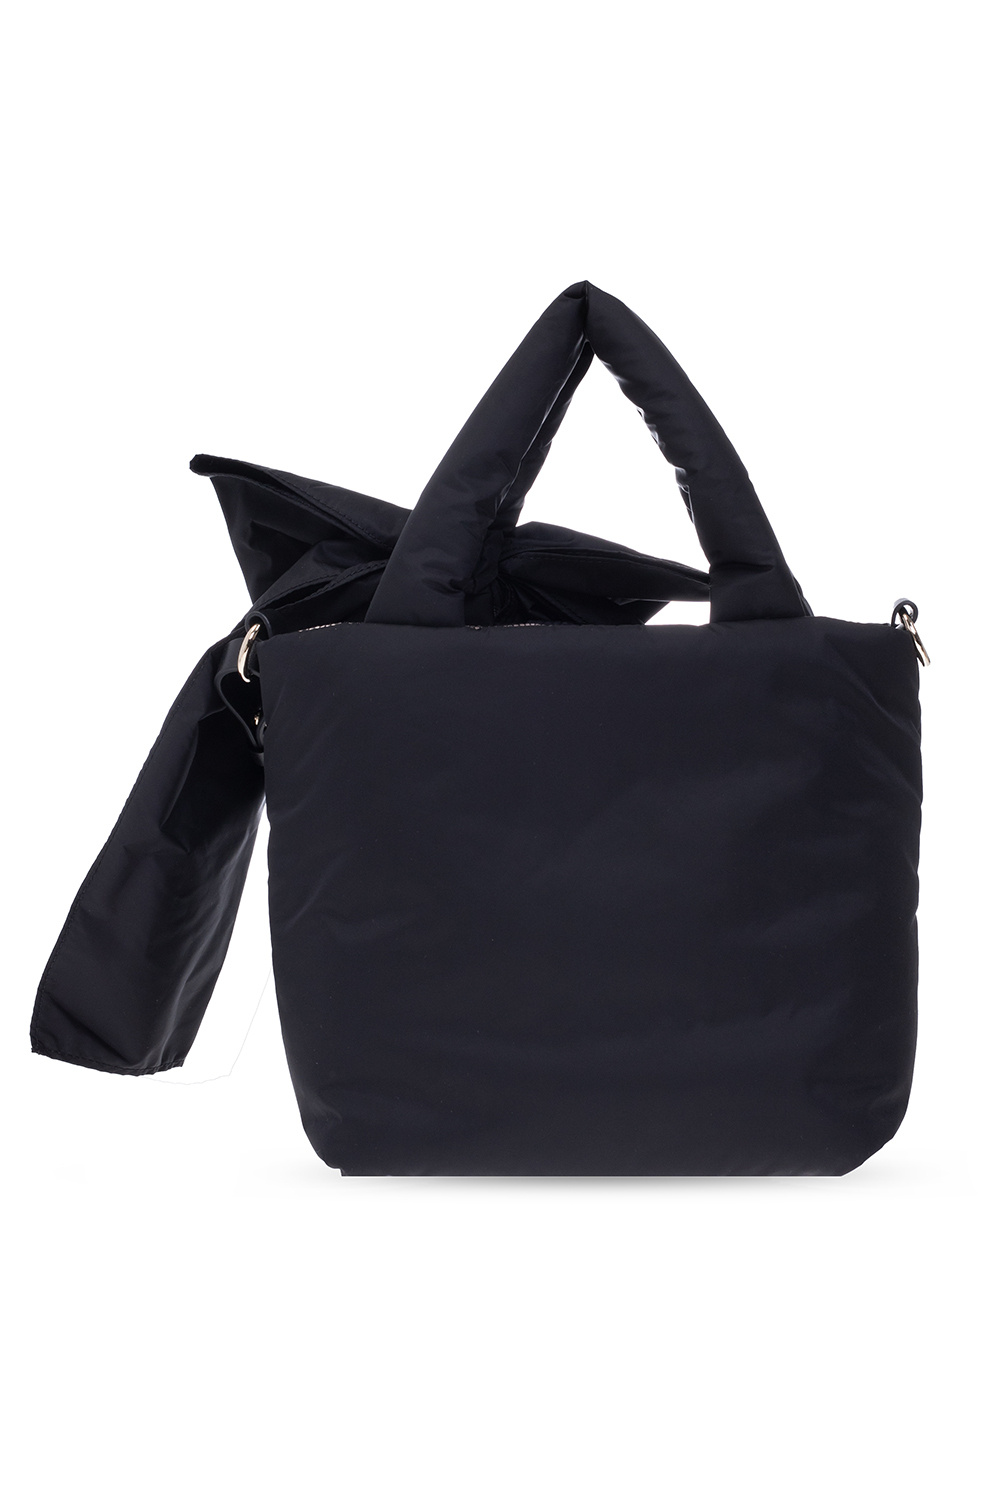 REDValentino SEE U THROUGH TOTE BAG - Shoulder Bag for Women